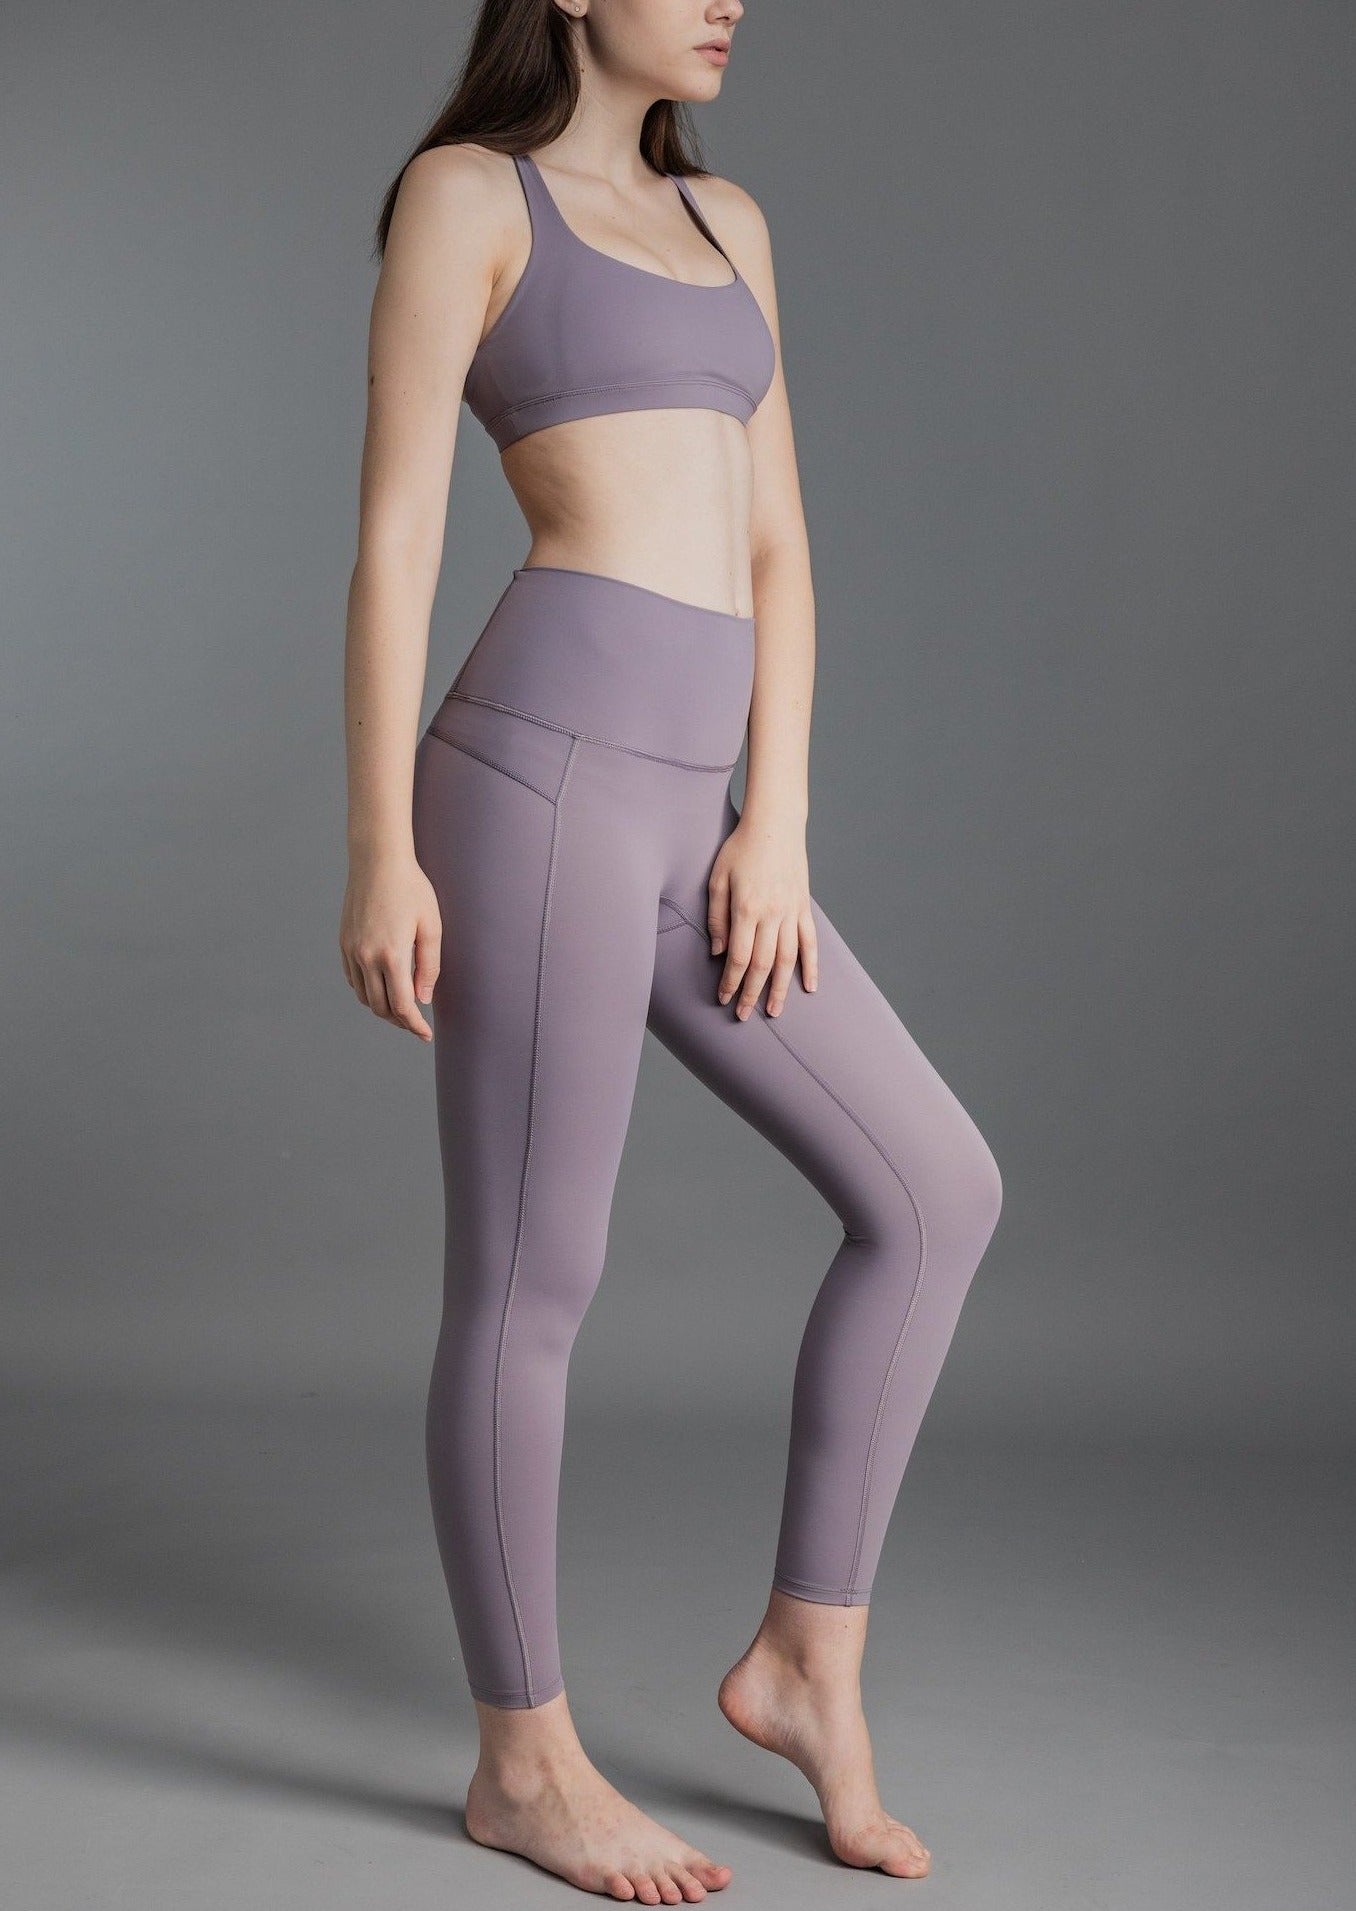 lilac yoga legging and bra set